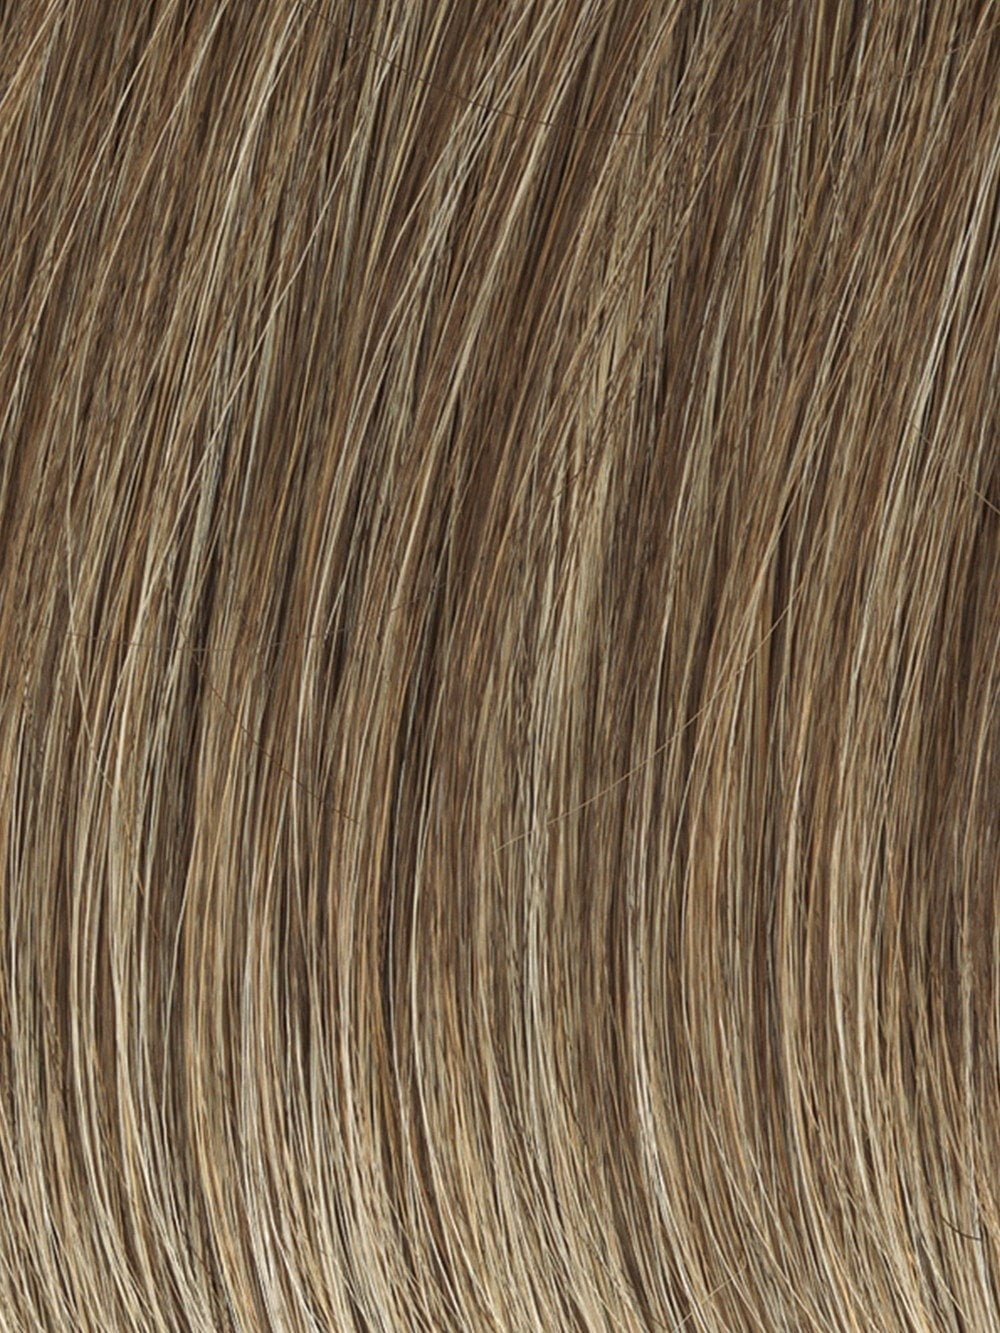 Brown-Blonde | Medium to light brown with salon highlights 